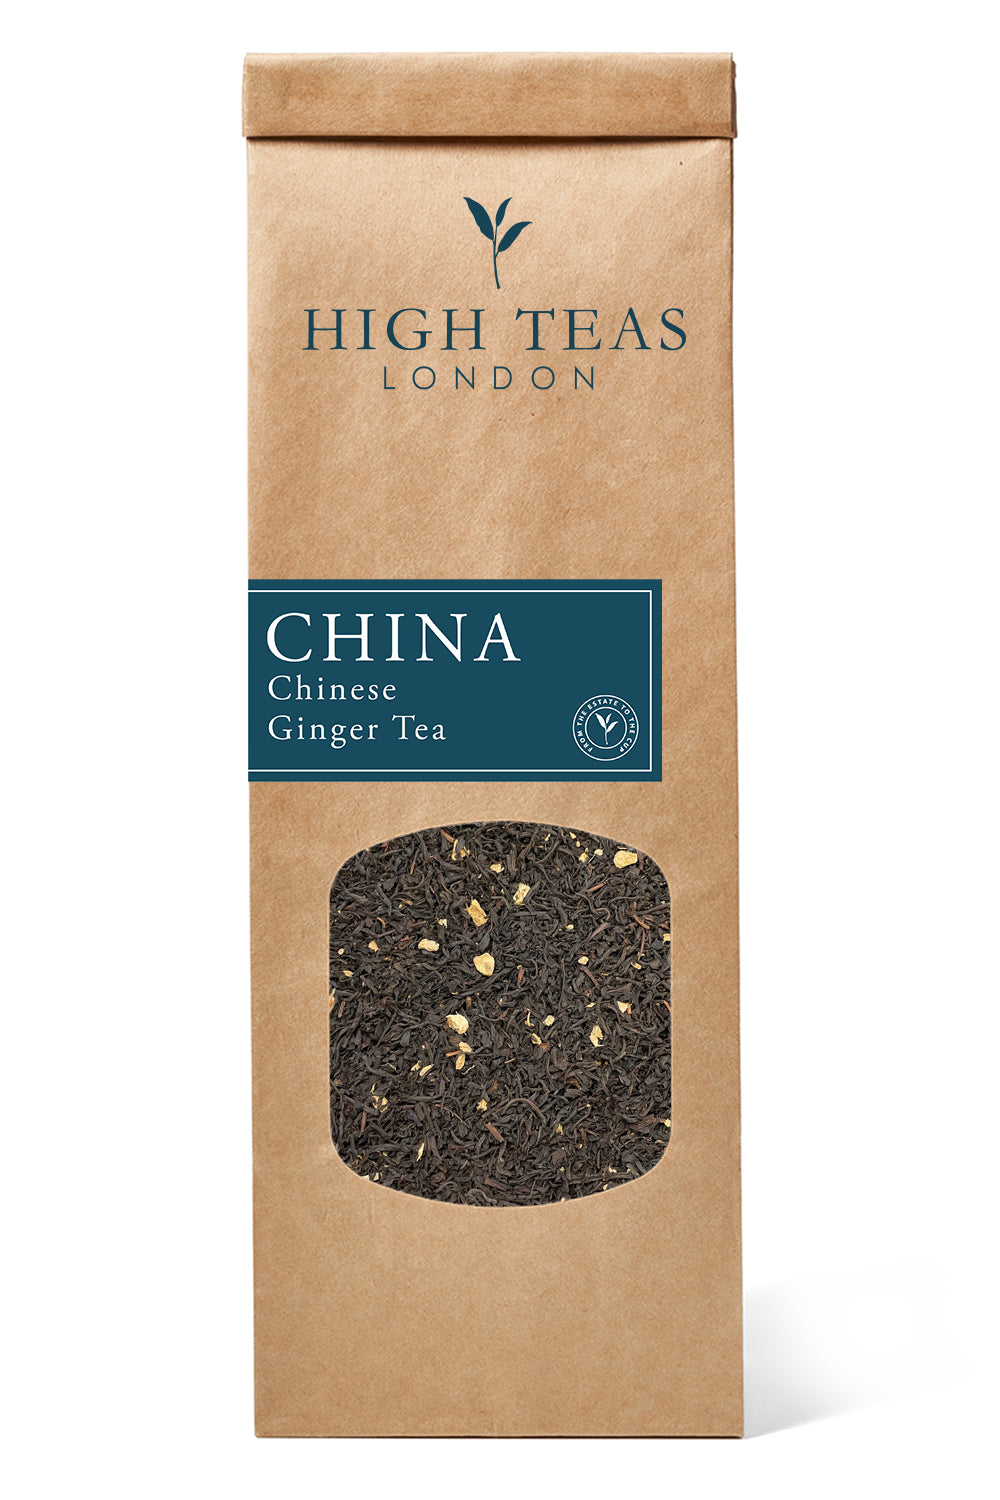 Chinese Ginger Tea-50g-Loose Leaf Tea-High Teas